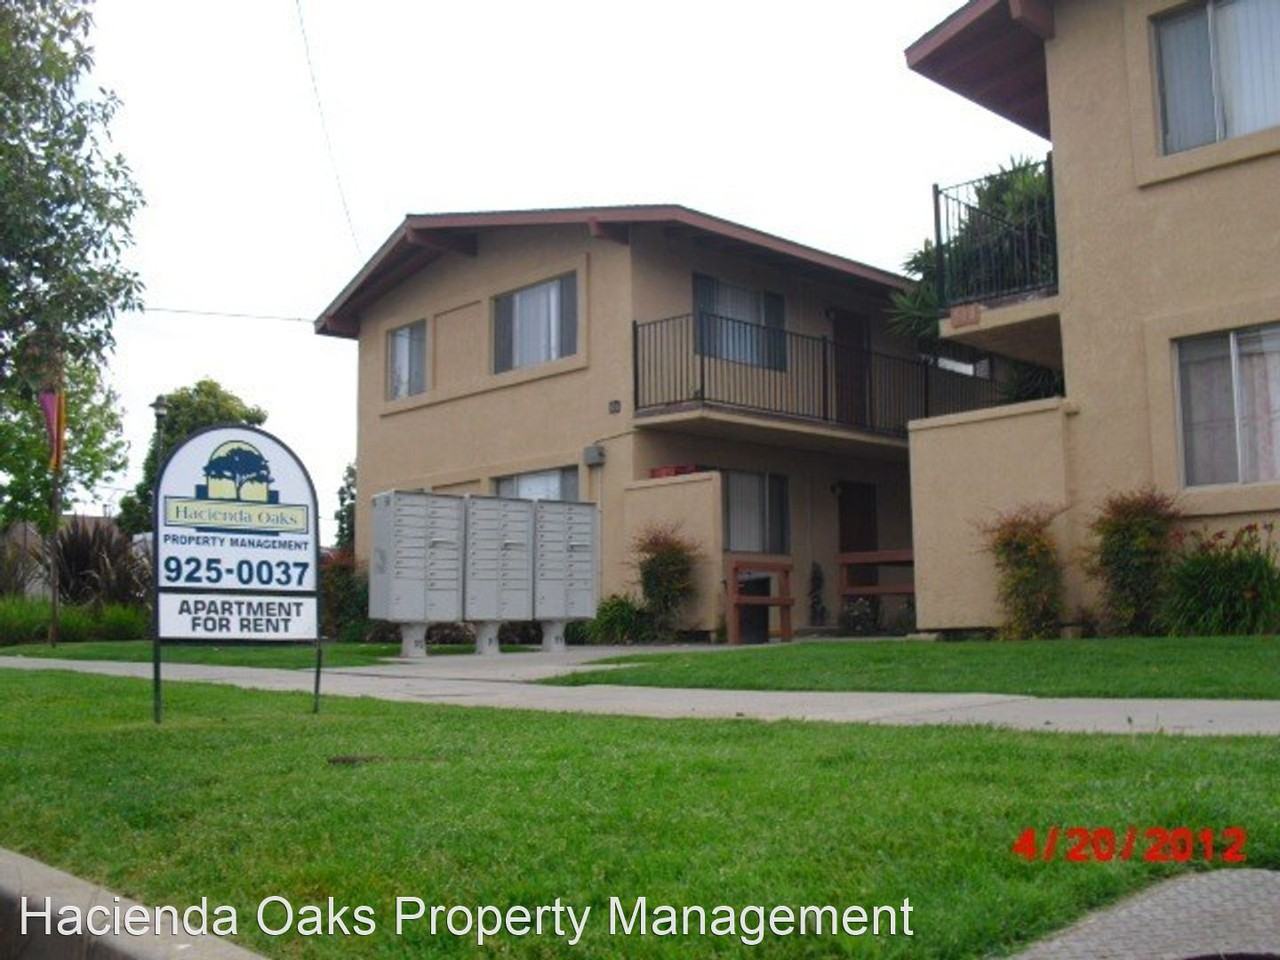 500-508 S. Oakley Apartments - 500 S Oakley Ave #508, Santa Maria, CA 93458  - Zumper